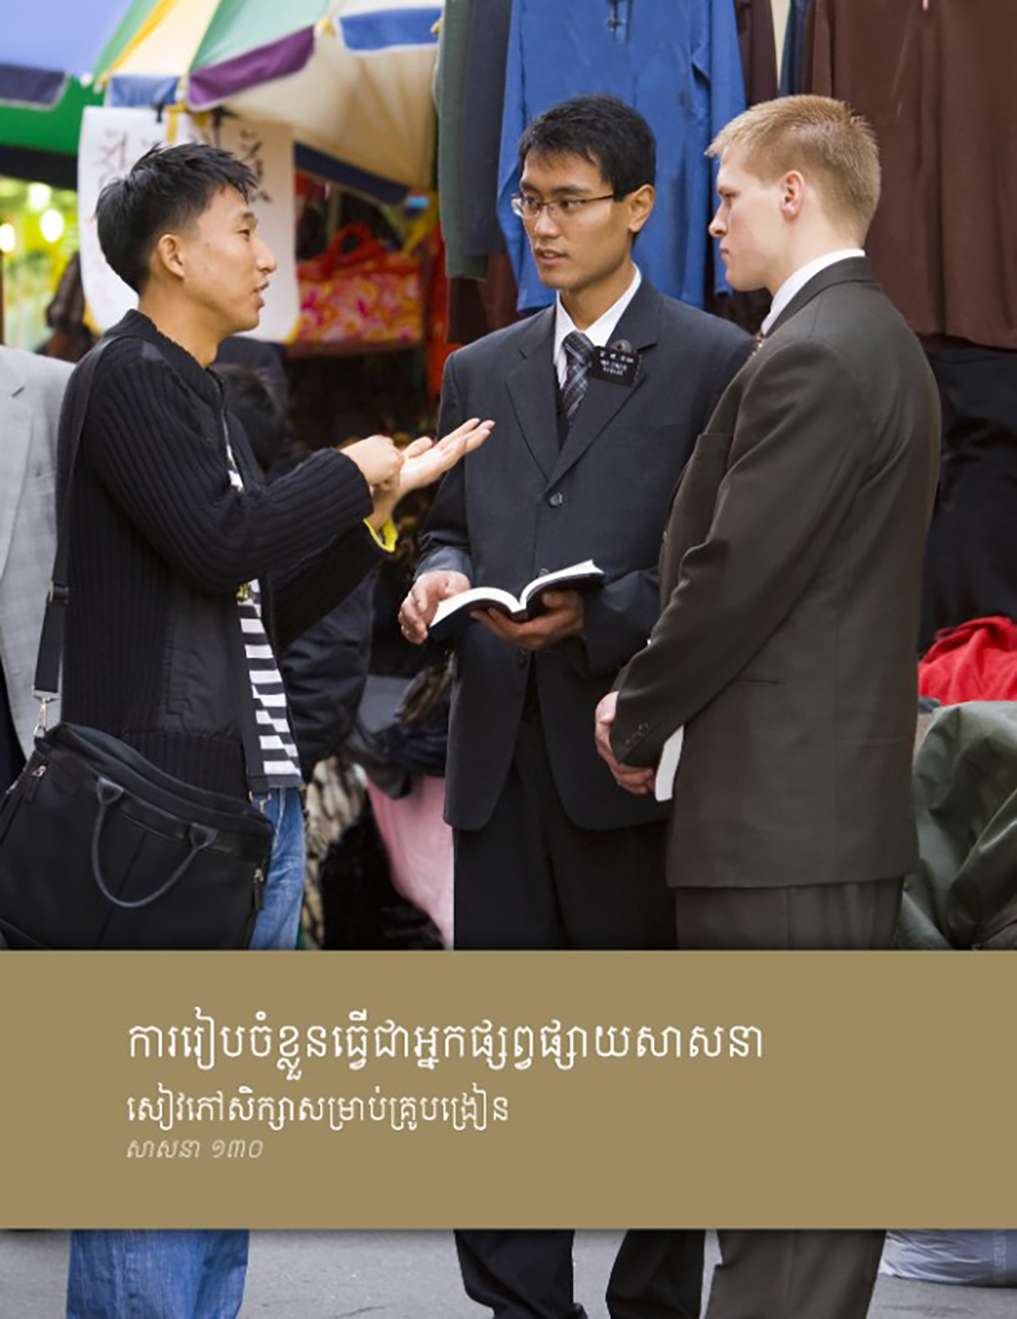 Missionary Preparation Teacher Manual (Religion 130) ( សៀវភៅសិក្សាសម្រាប់​គ្រូបង្រៀន ​ស្ដីពី​ការរៀបចំខ្លួន​ធ្វើ​ជា​អ្នក​ផ្សព្វផ្សាយ​សាសនា ( សាសនា ១៣០ )